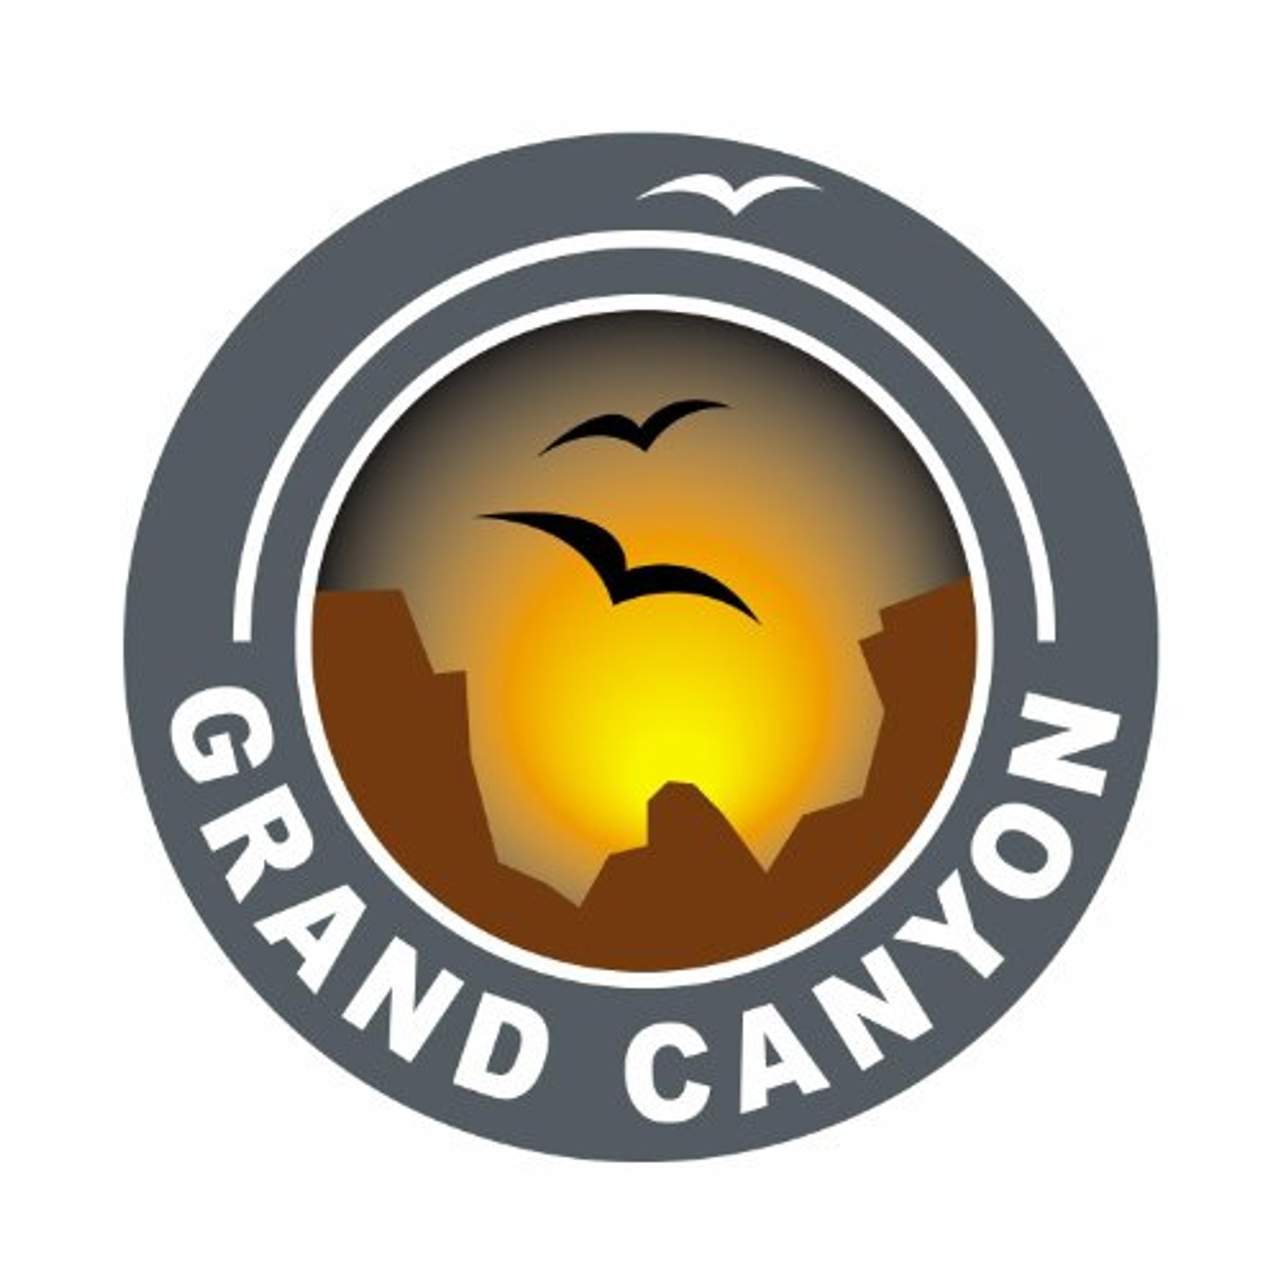 Grand Canyon Comfort faltbarer Campingstuhl